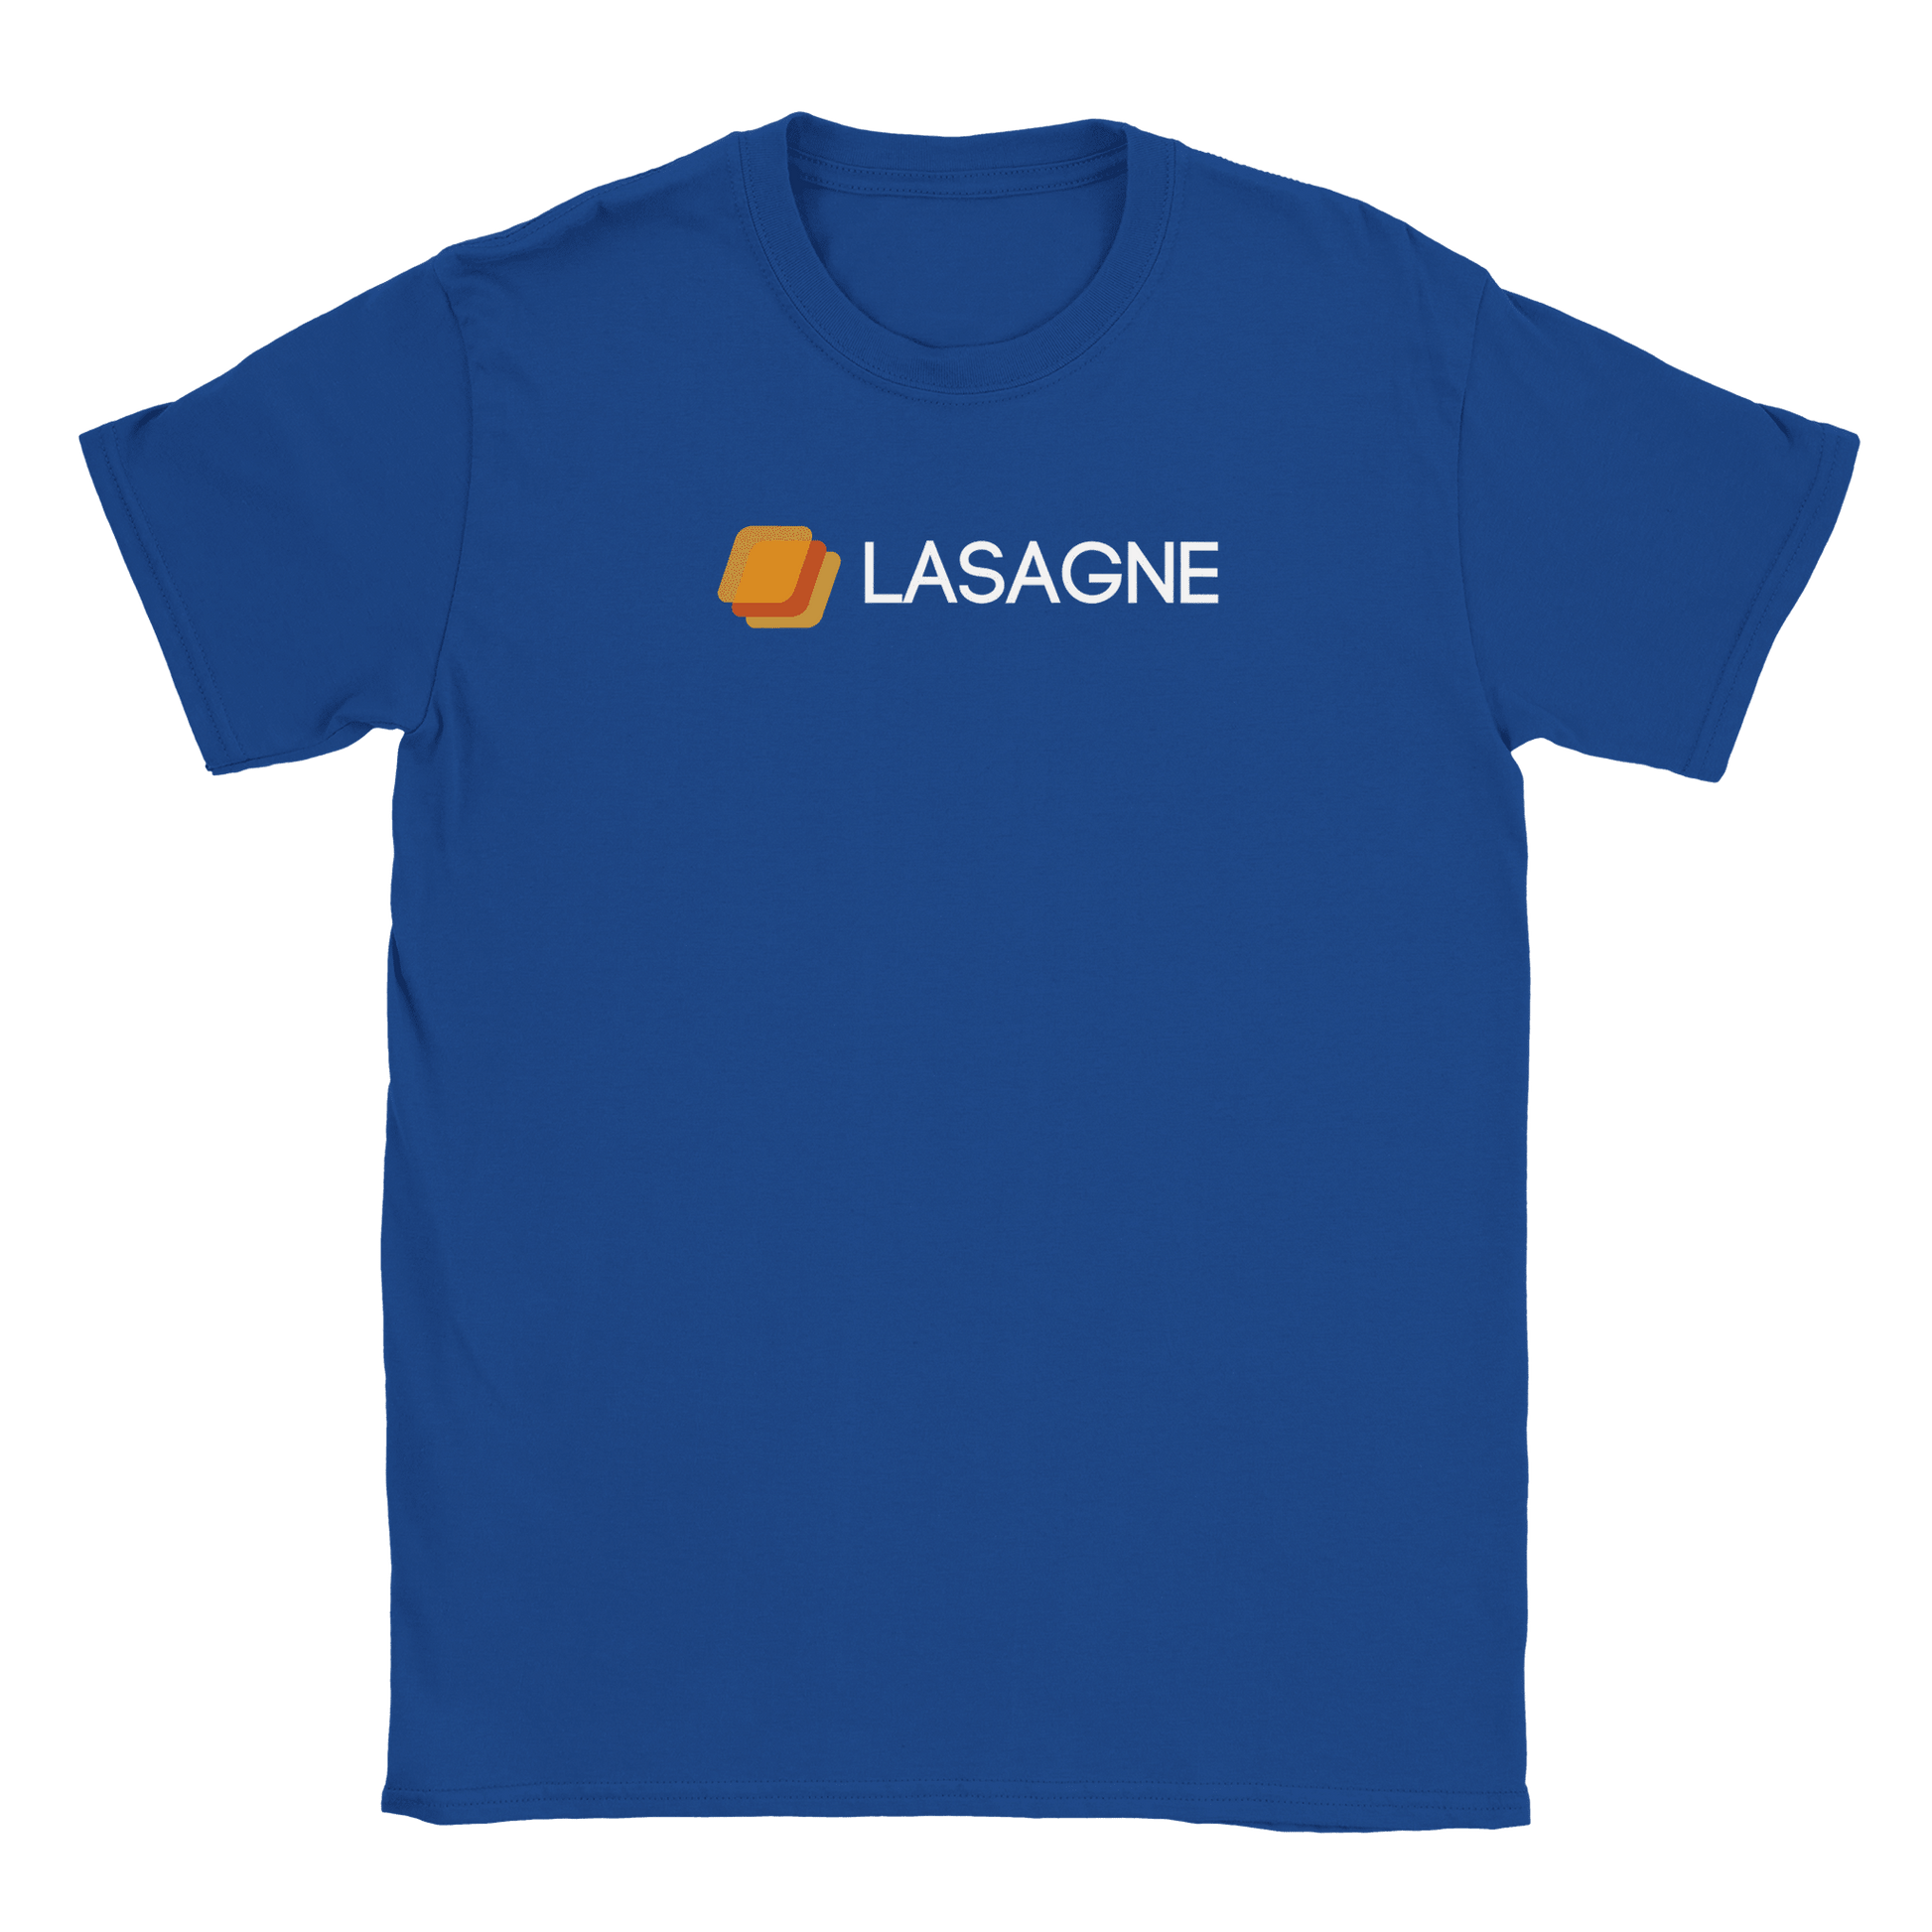 Lasagne - T-shirt Blå